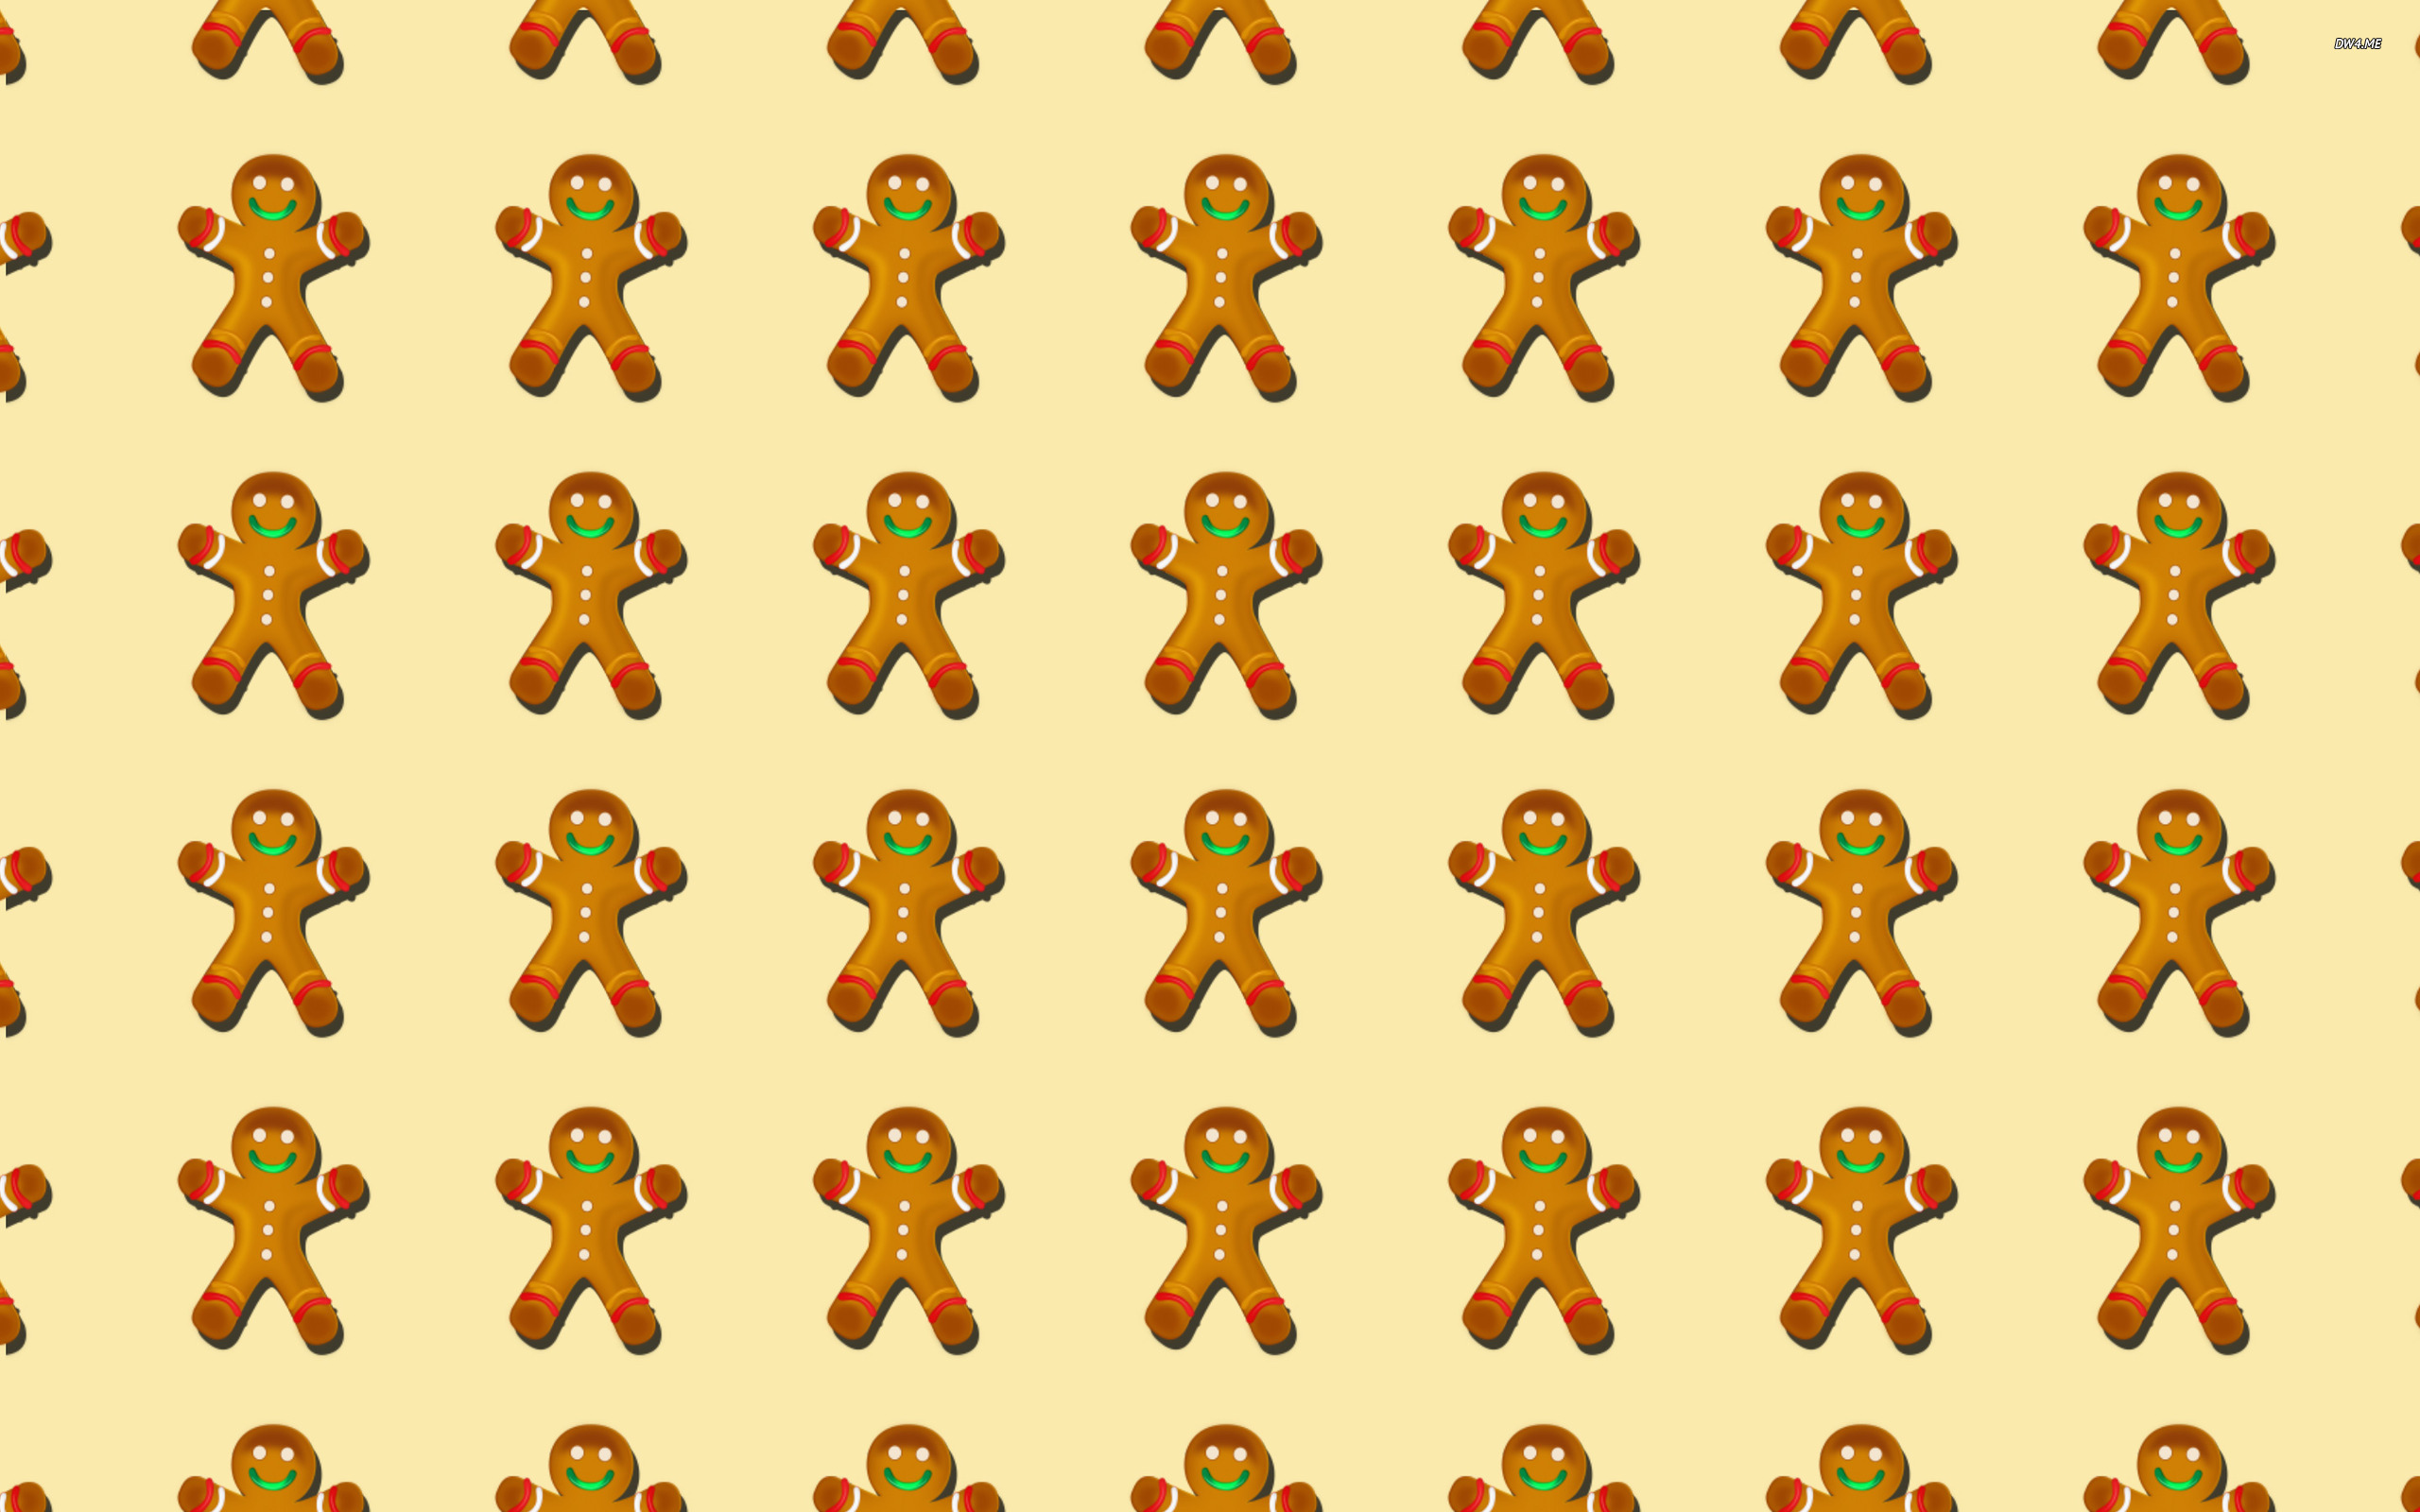 Gingerbread Man Pictures  Download Free Images on Unsplash